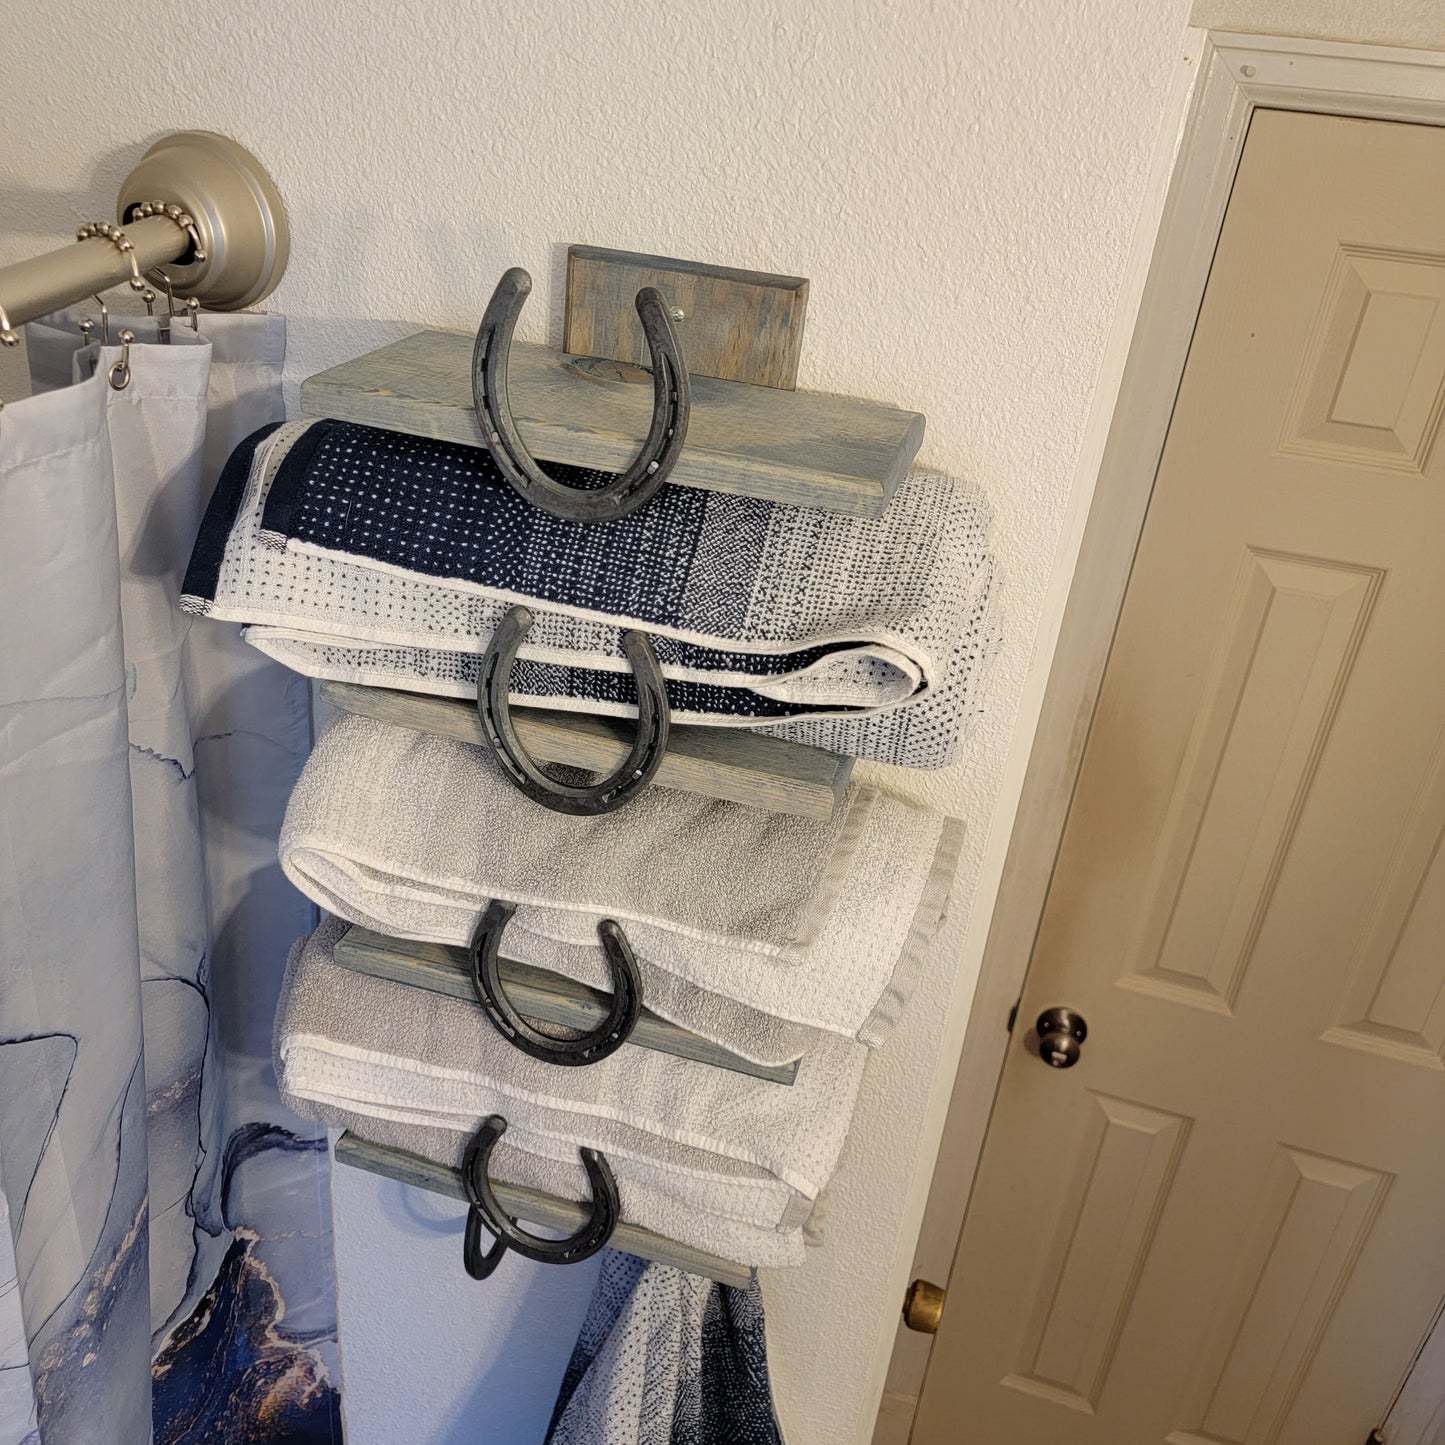 BTR - Bathroom Towel Rack